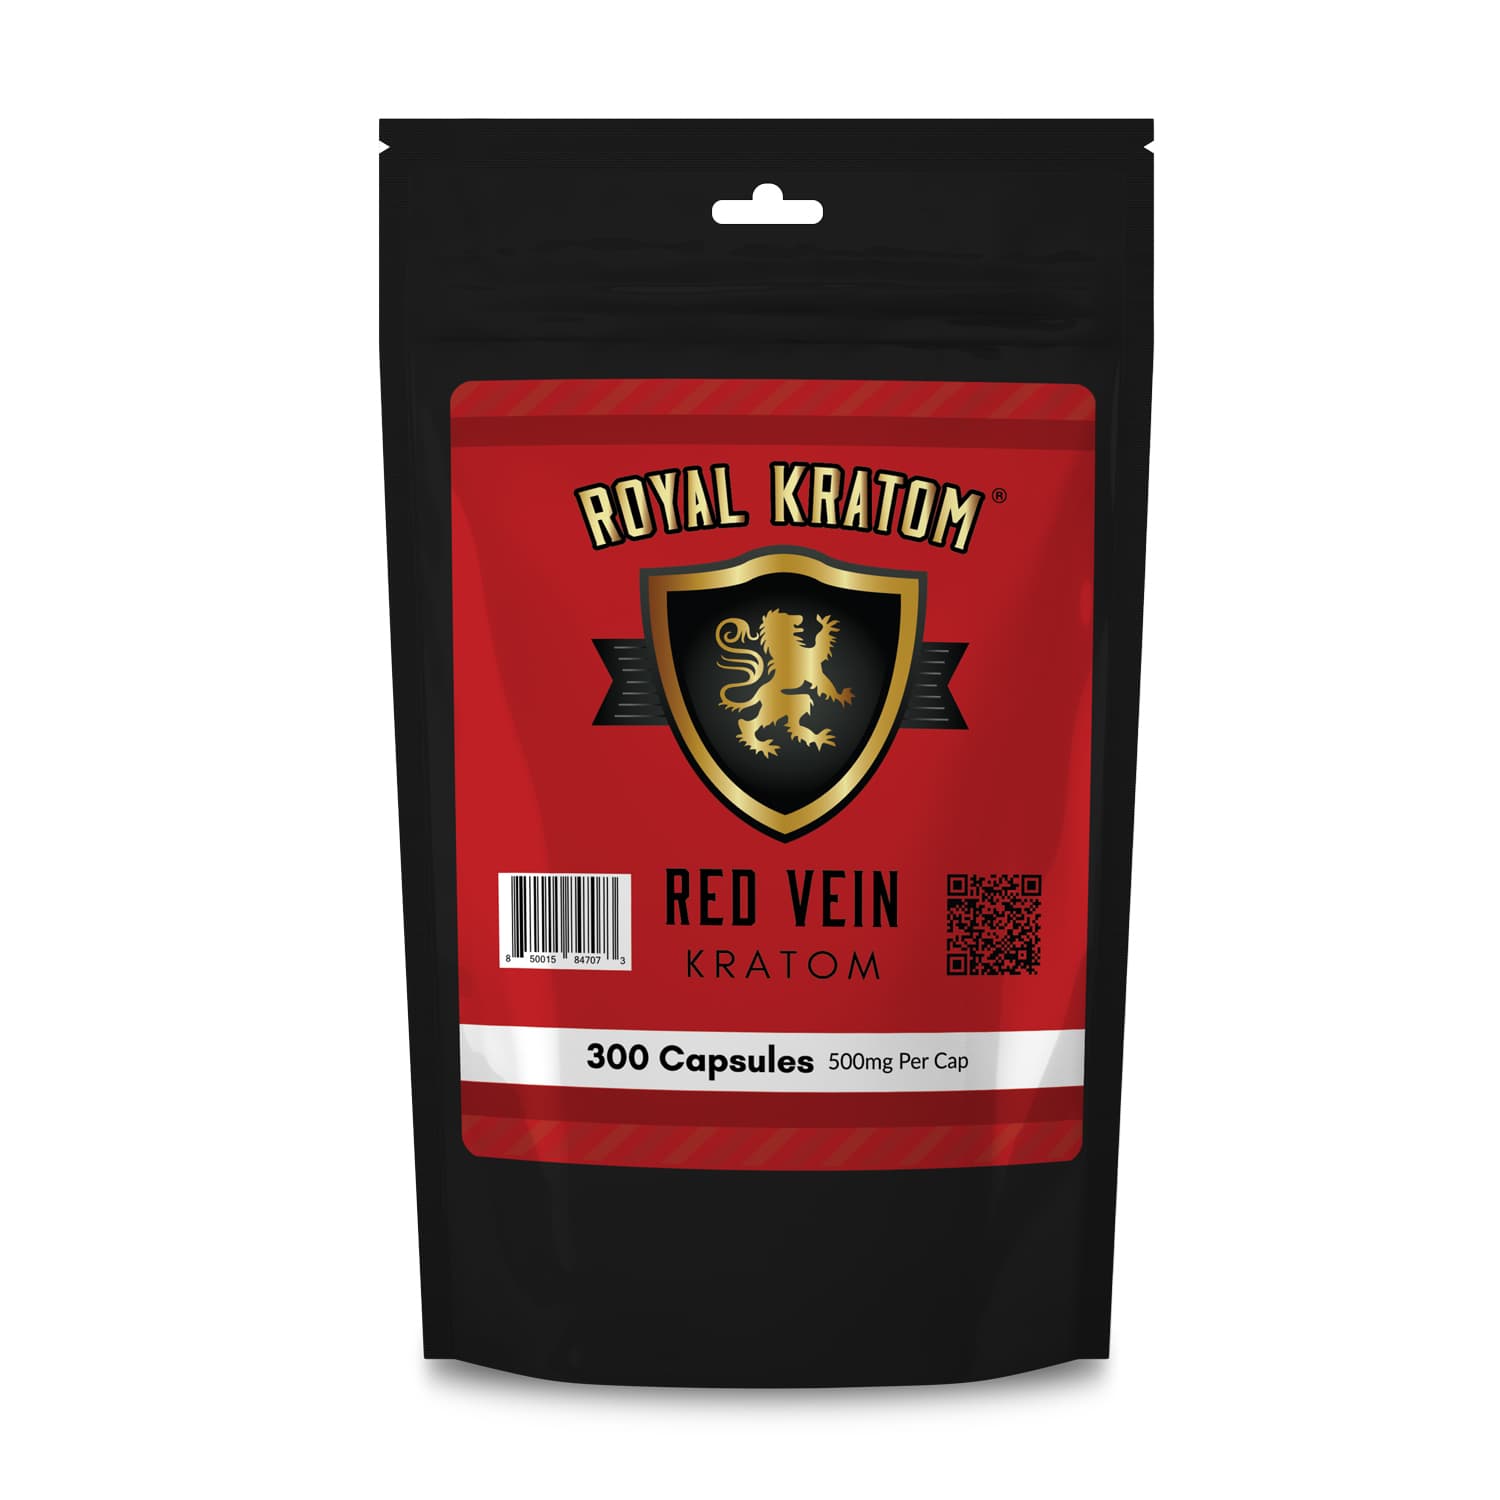 Royal Kratom Red Vein Kratom Capsules 300 Count front of package